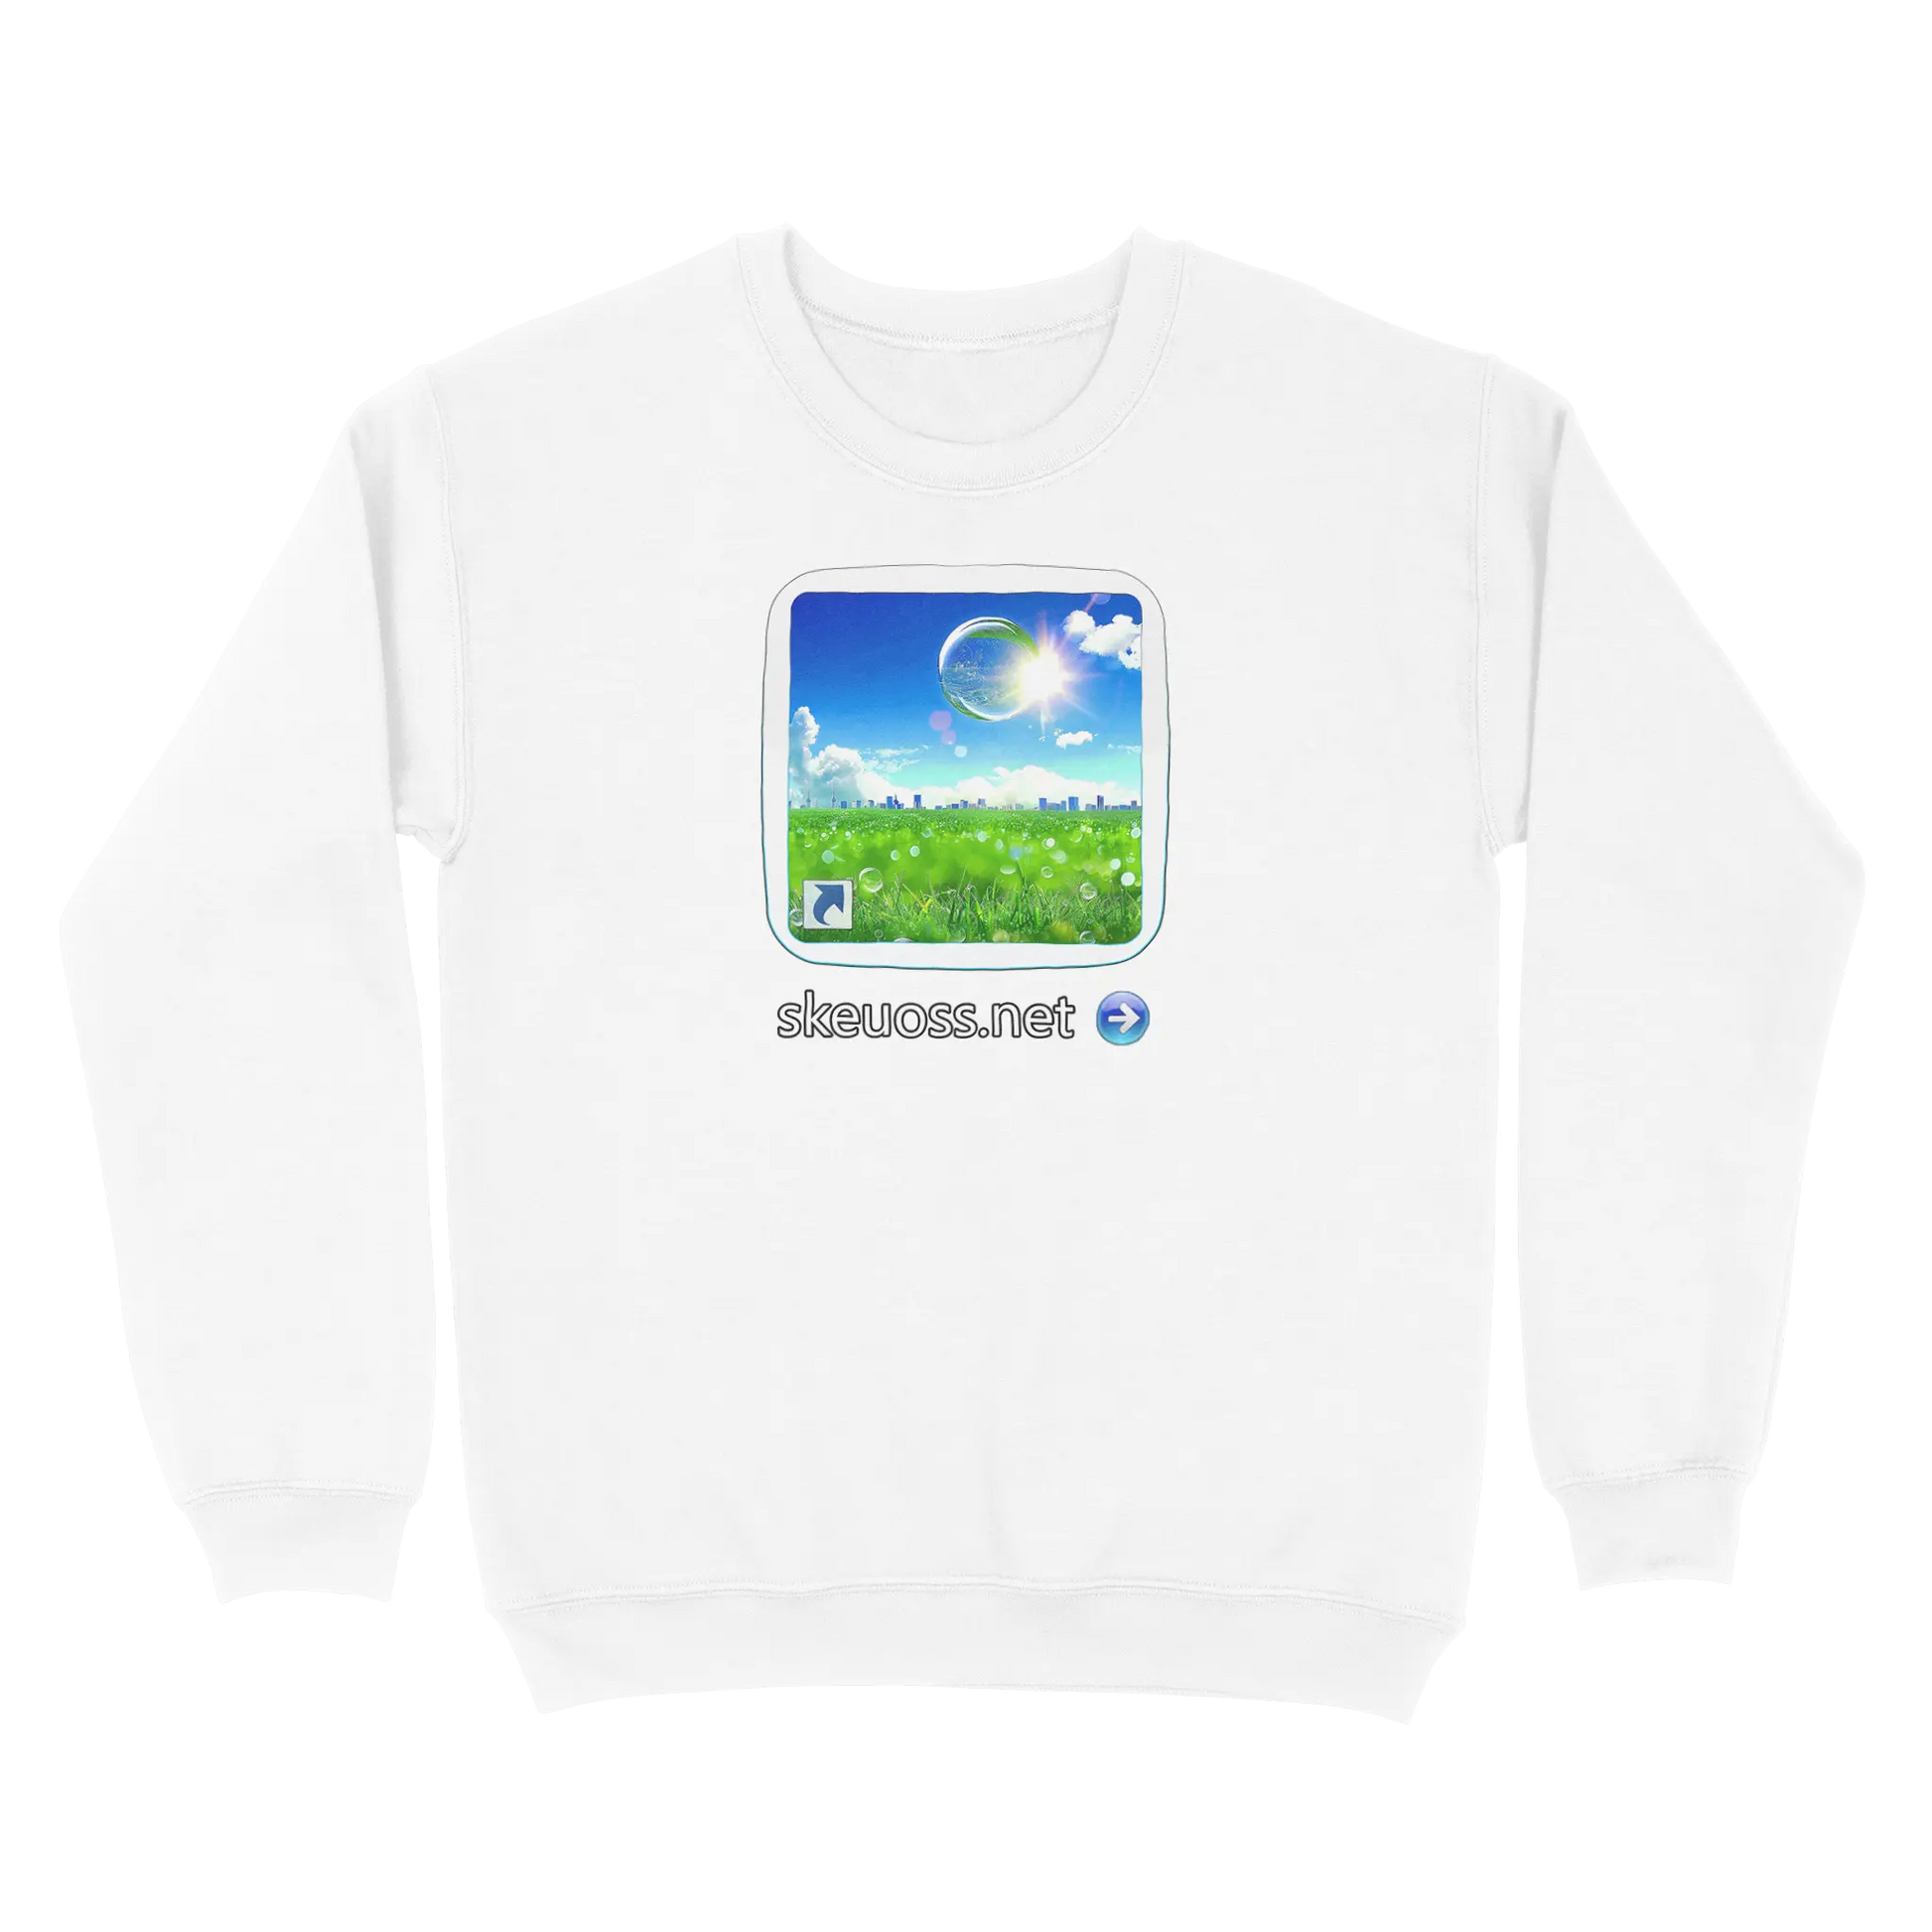 Frutiger Aero Sweatshirt - User Login Collection - User 257